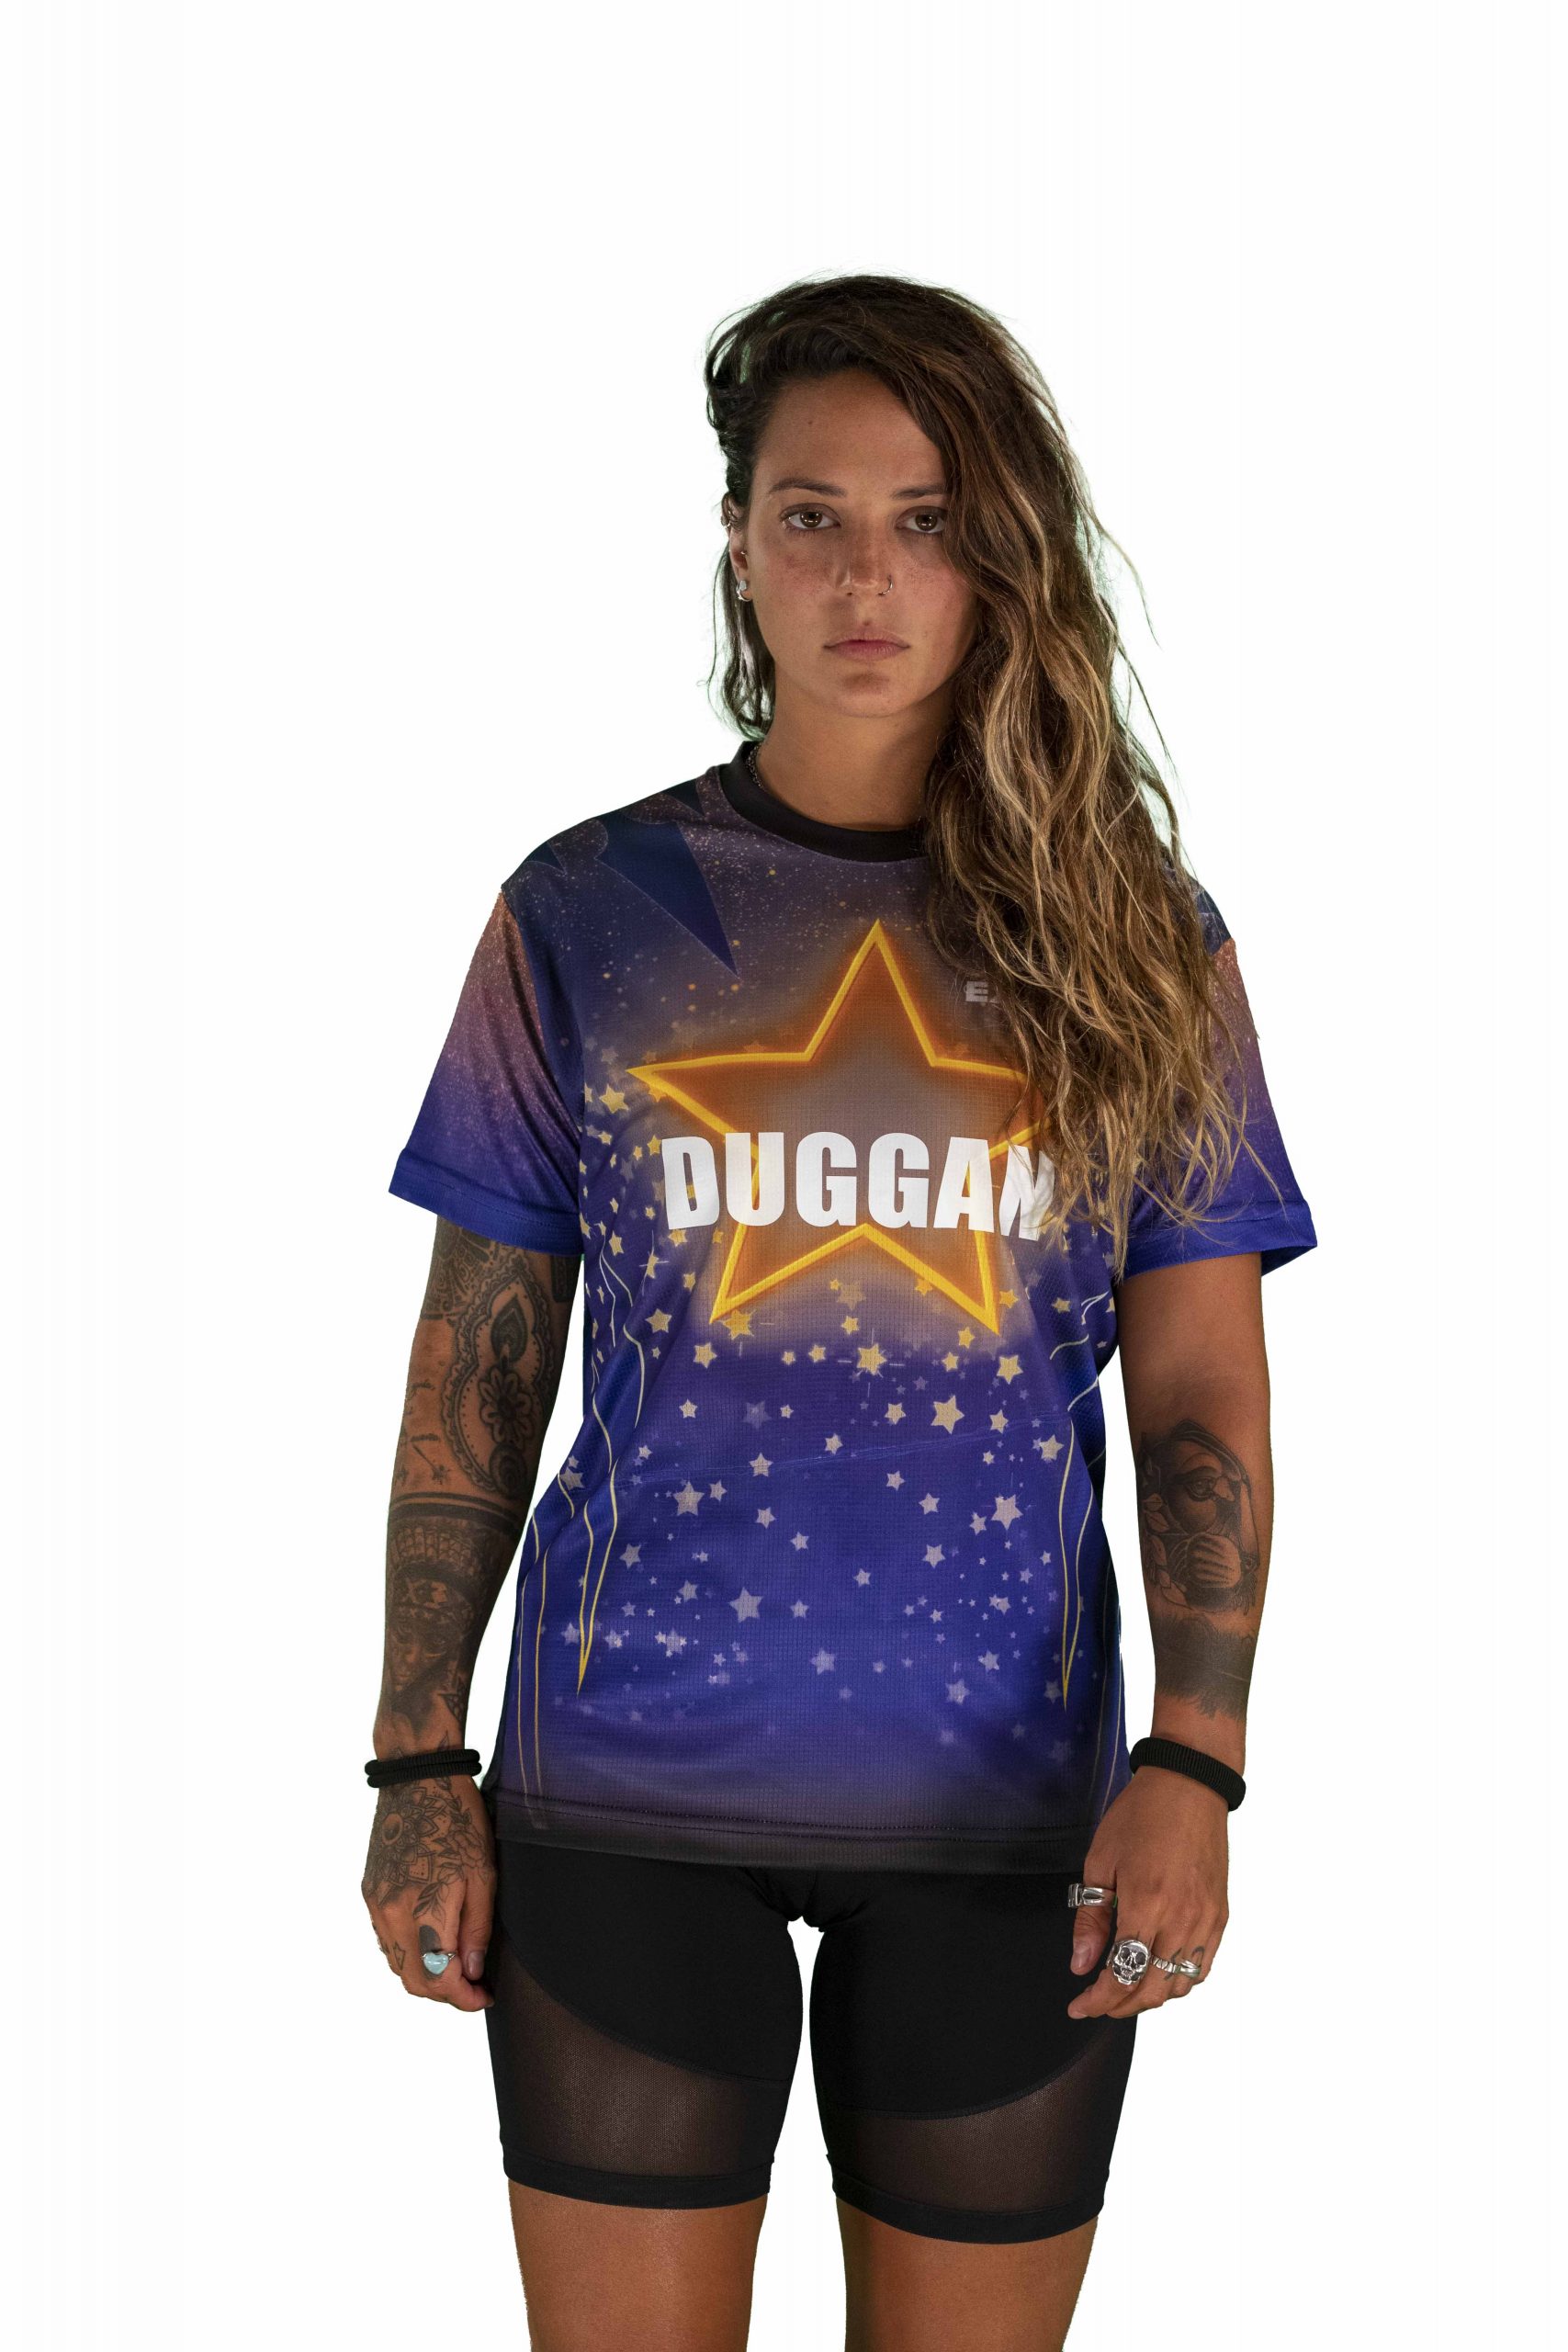 Ximena Duggan, del equipo Azul, fue eliminada de “Exatlón All Star”